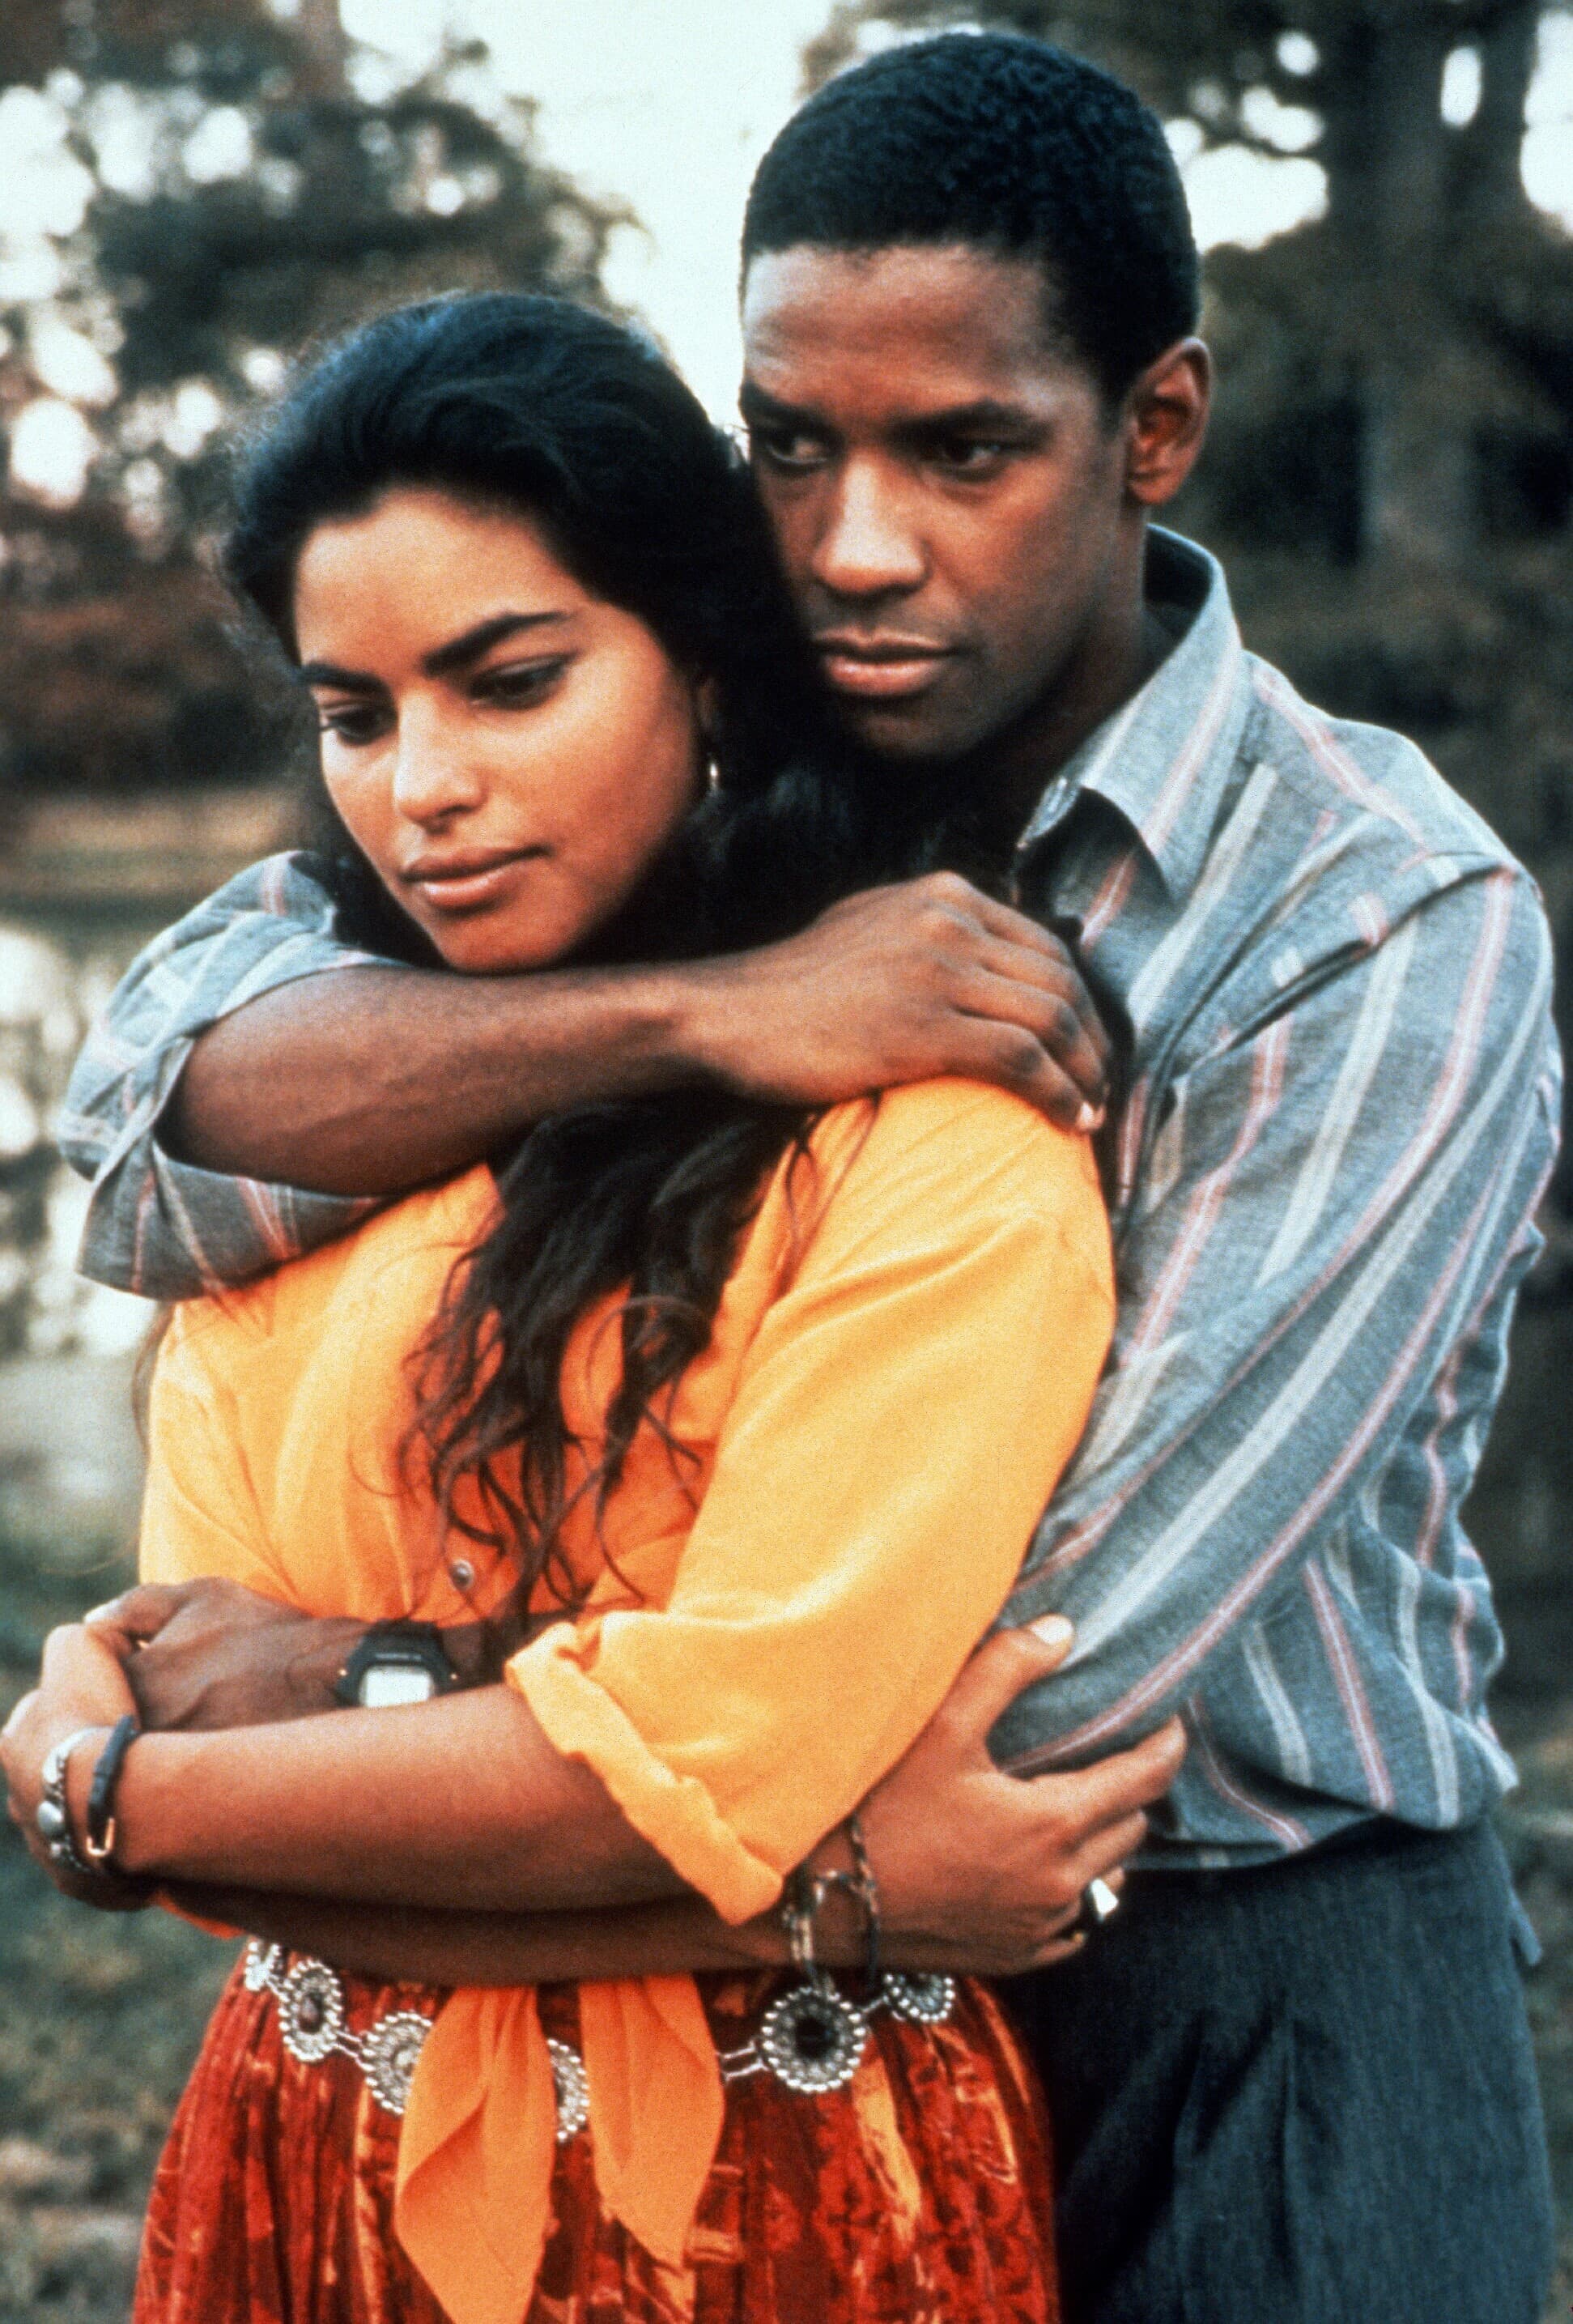 1991 love story Mississippi Masala returns to the screen at Coolidge Corner WBUR News